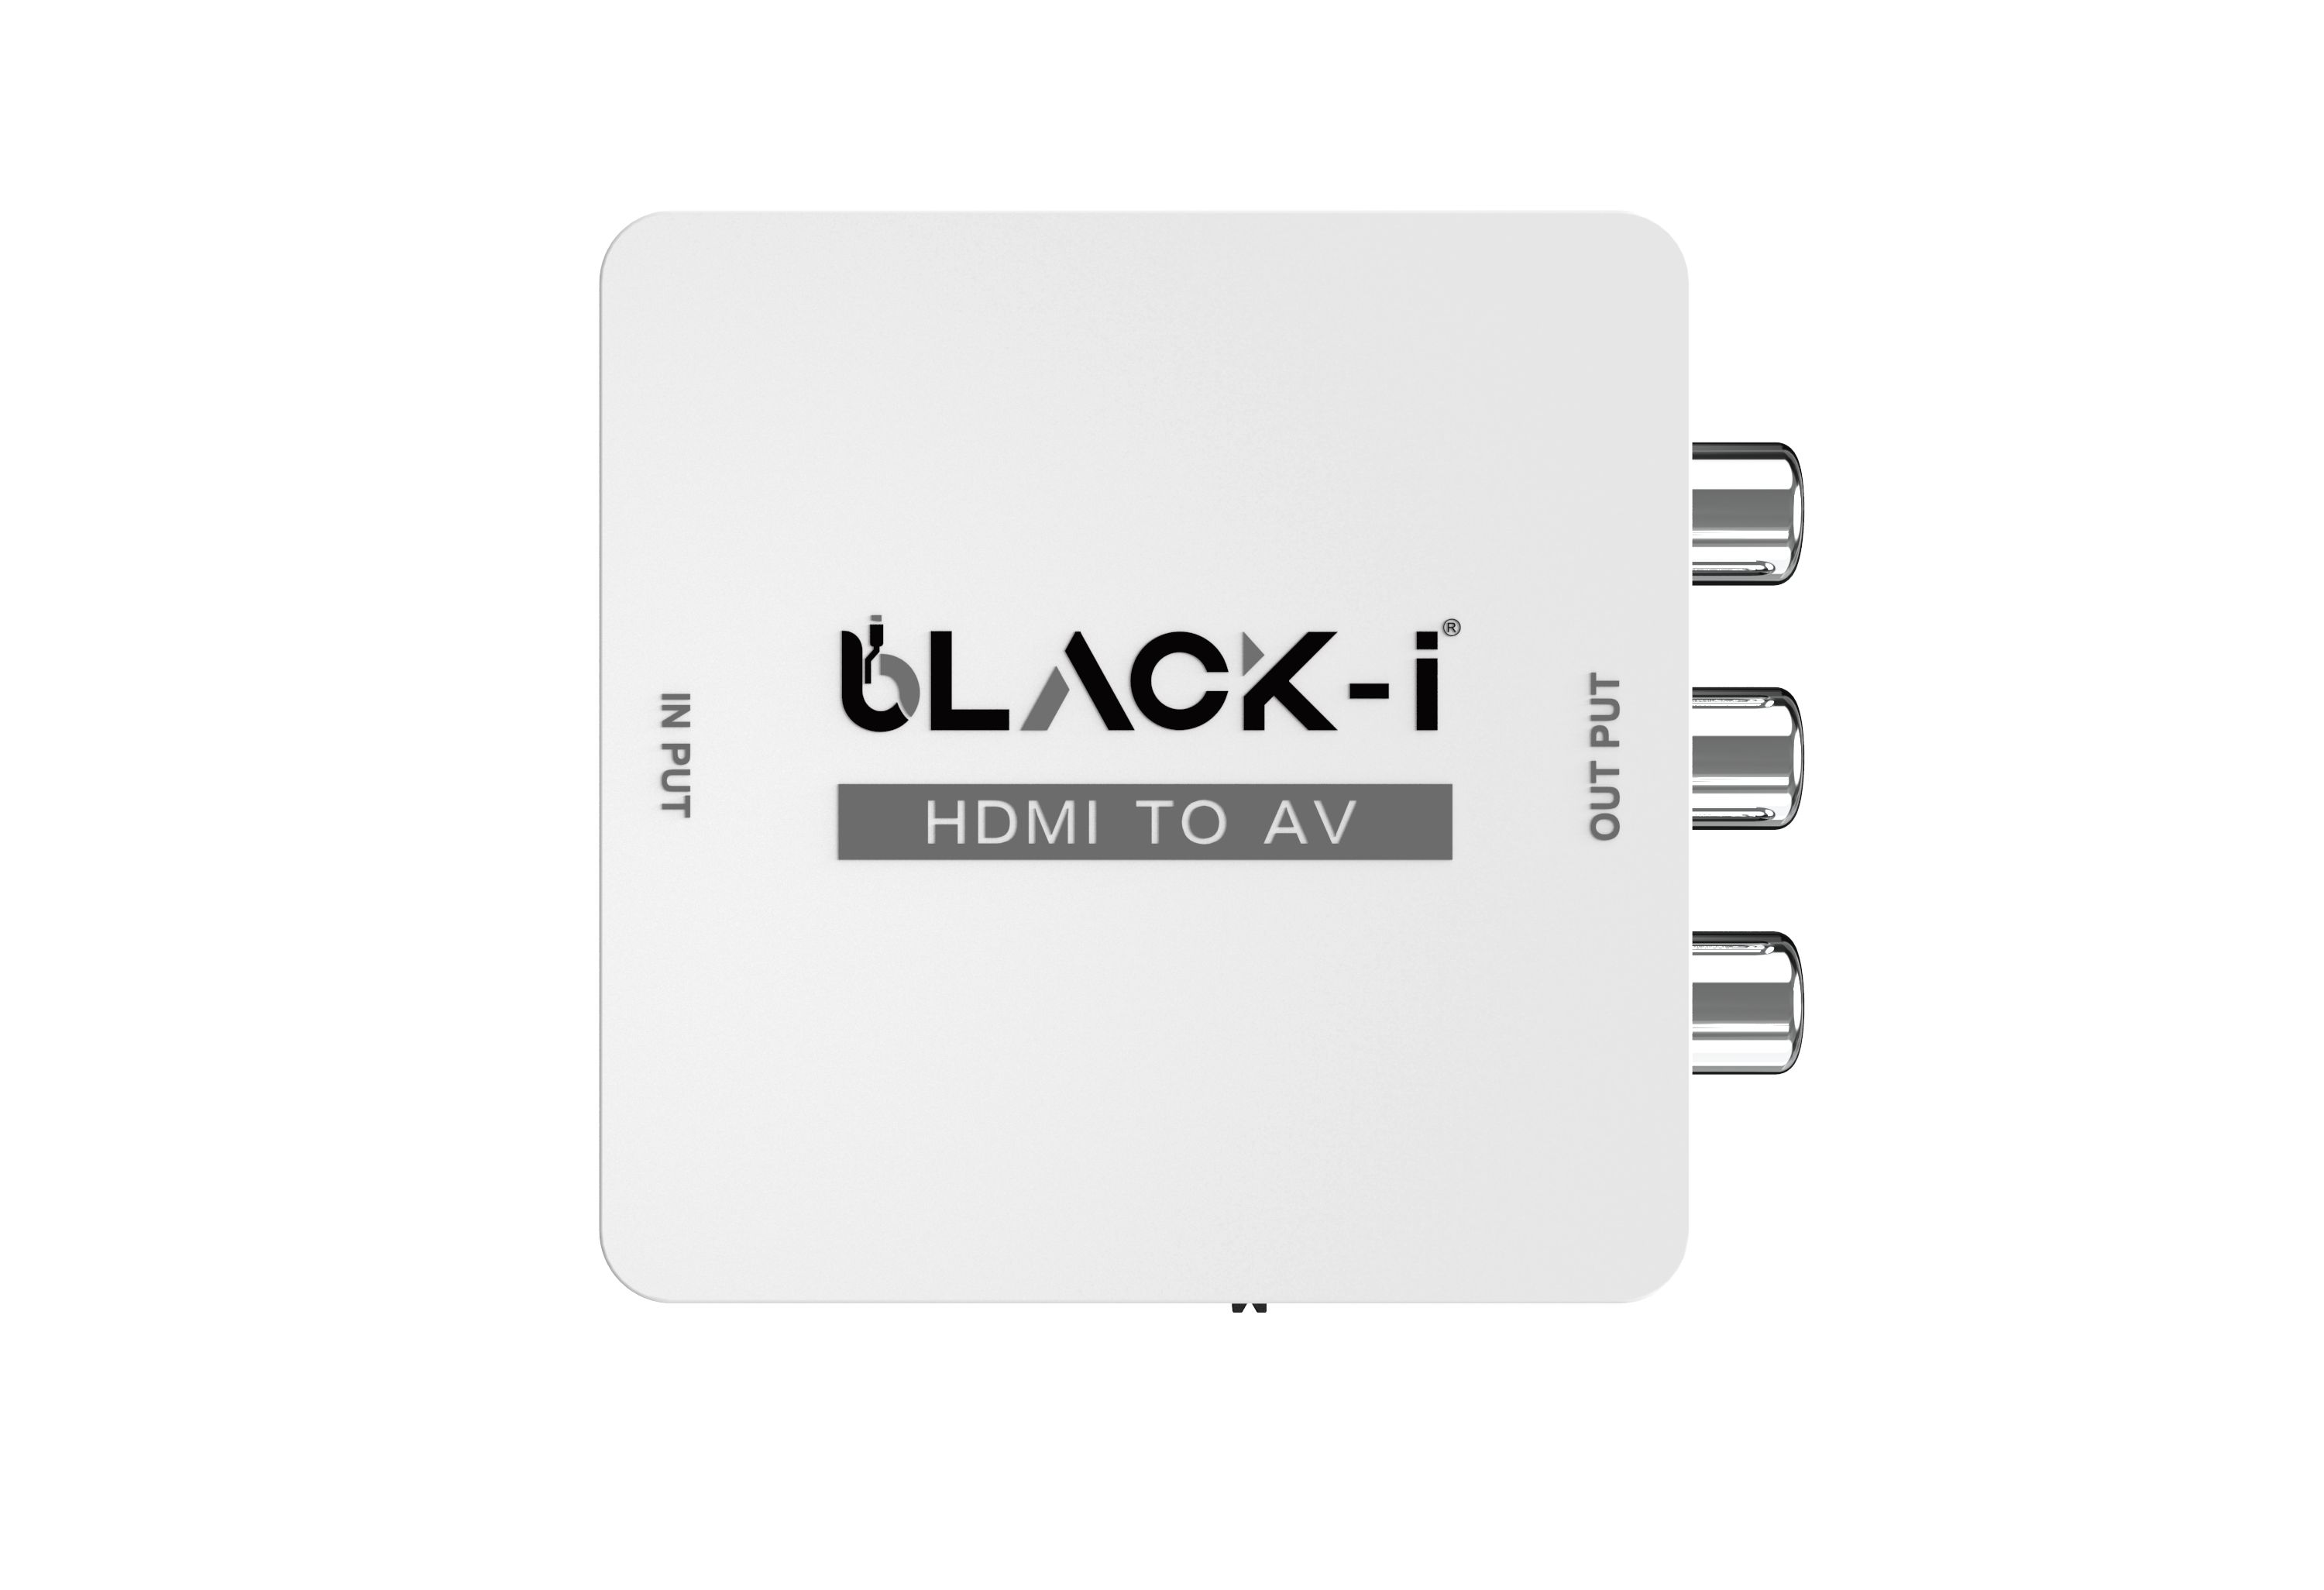 Black-i HDMI to AV Converter